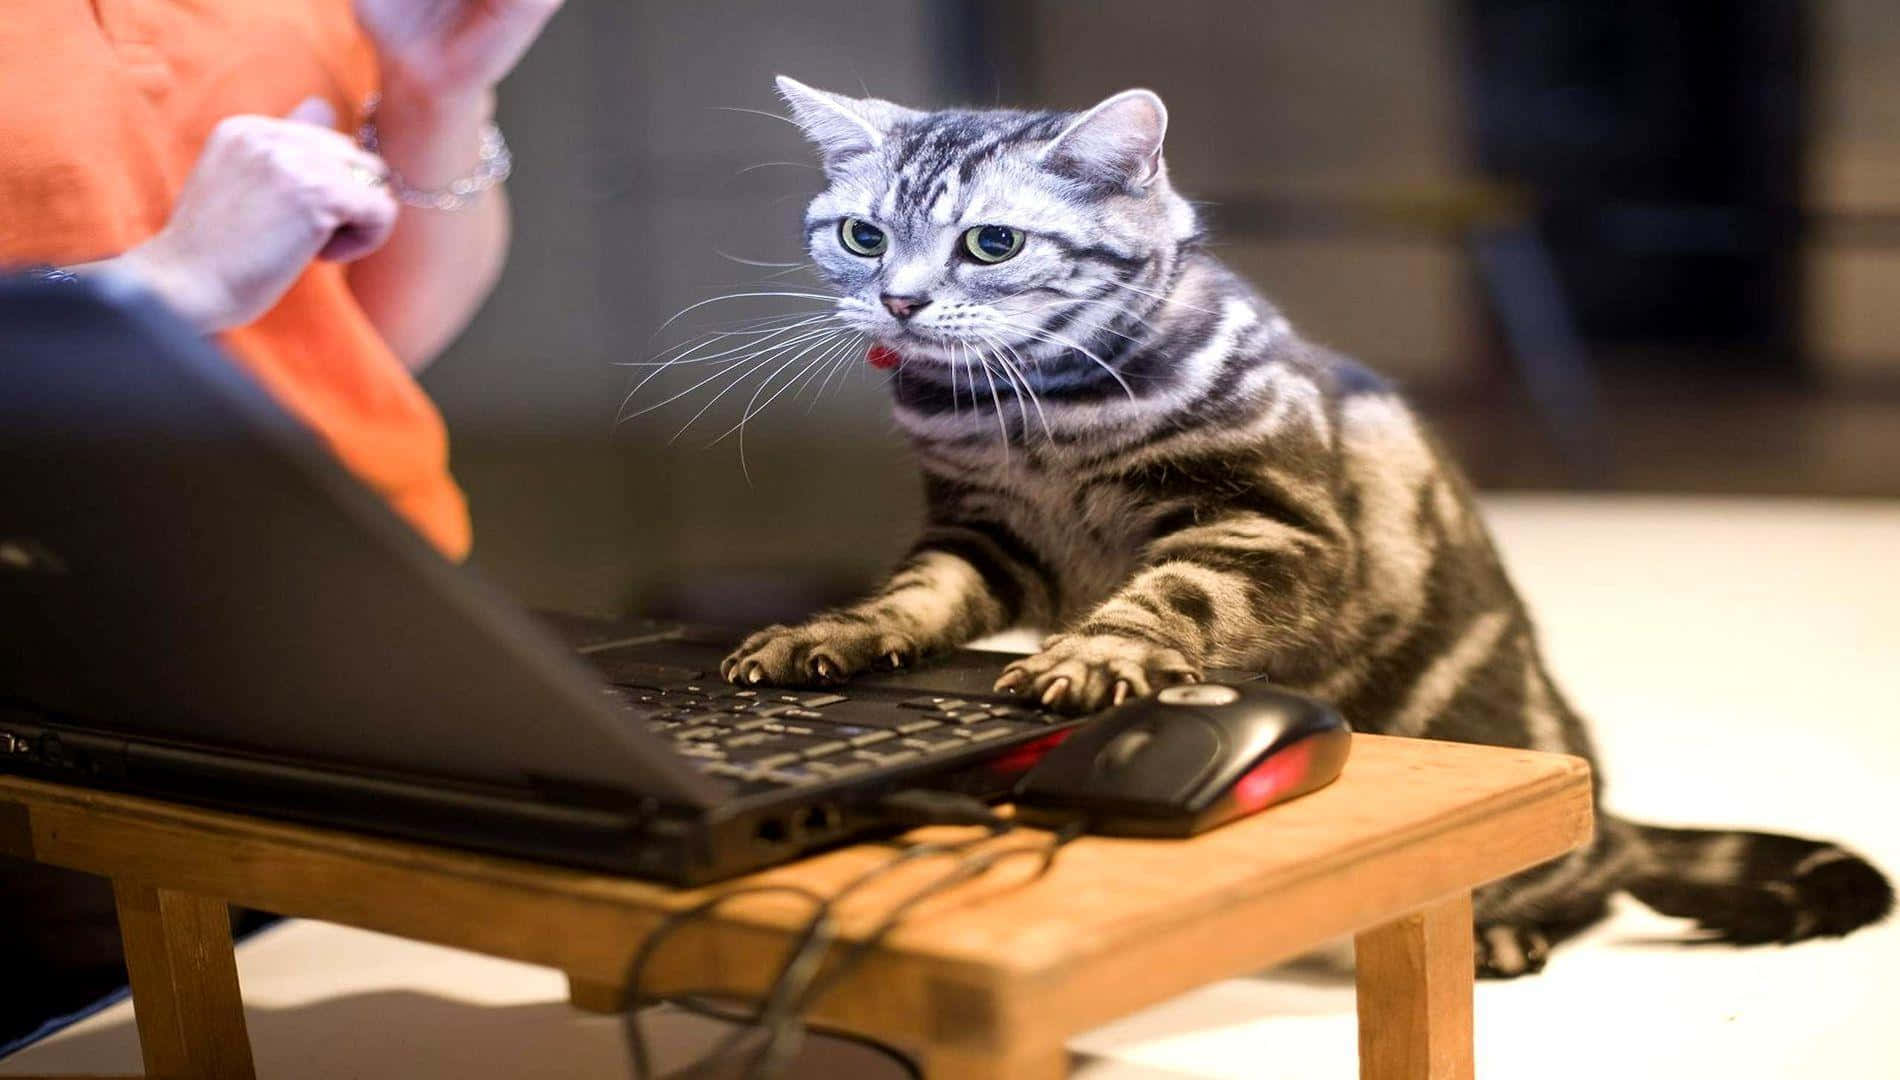 Schwarzesseltsames Katze Arbeitet Am Laptop Bild